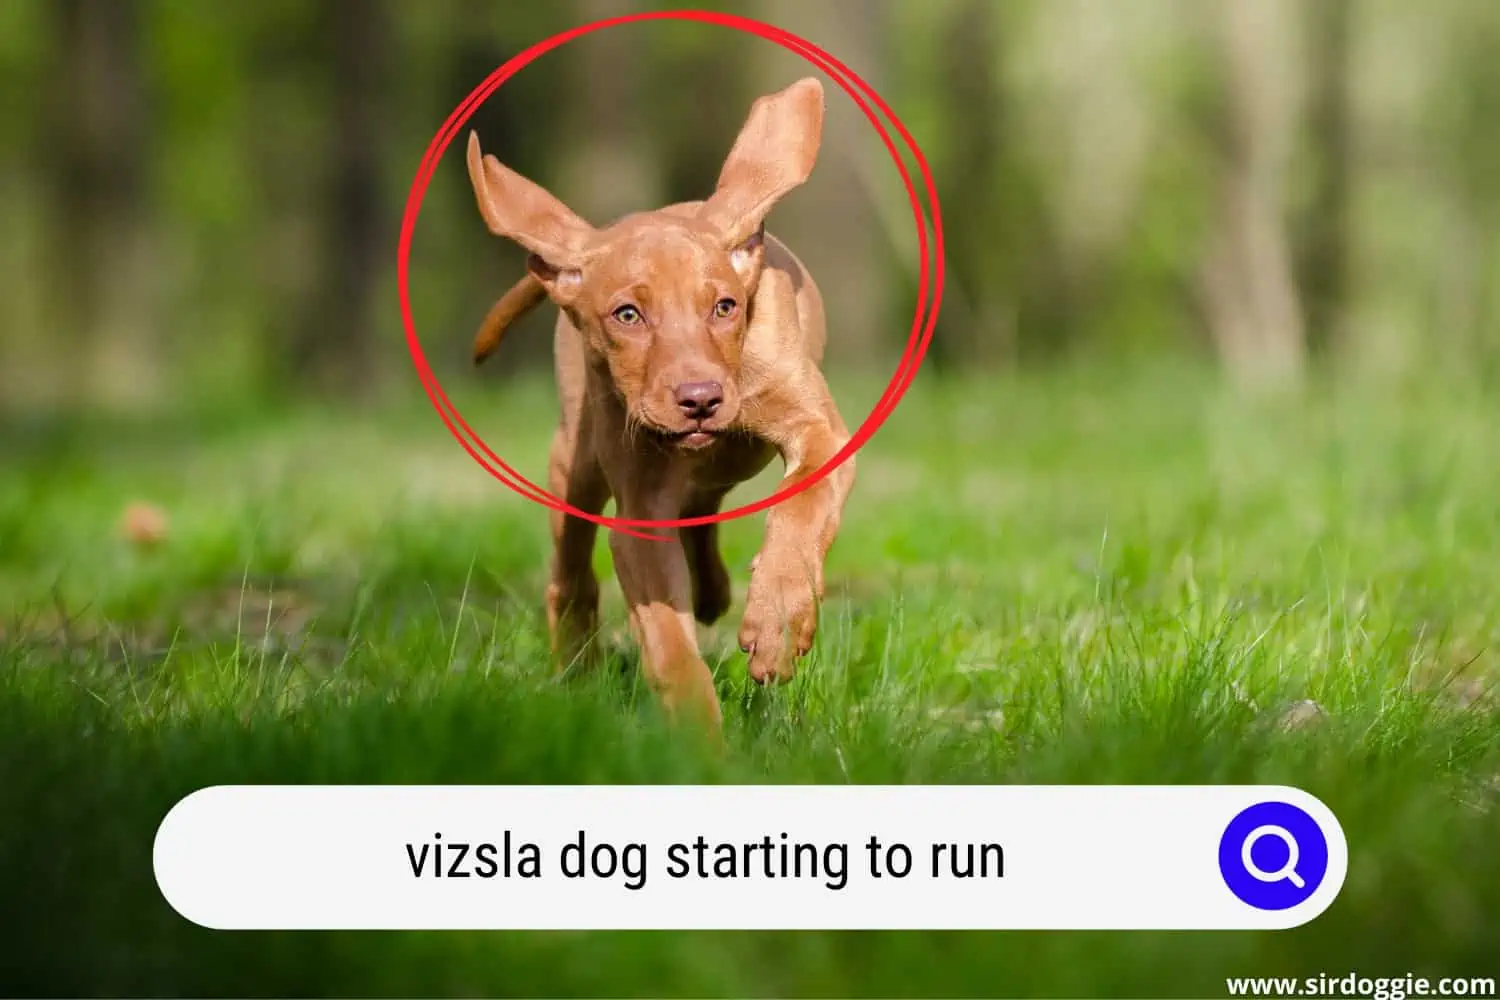 A Vizsla dog starting to run